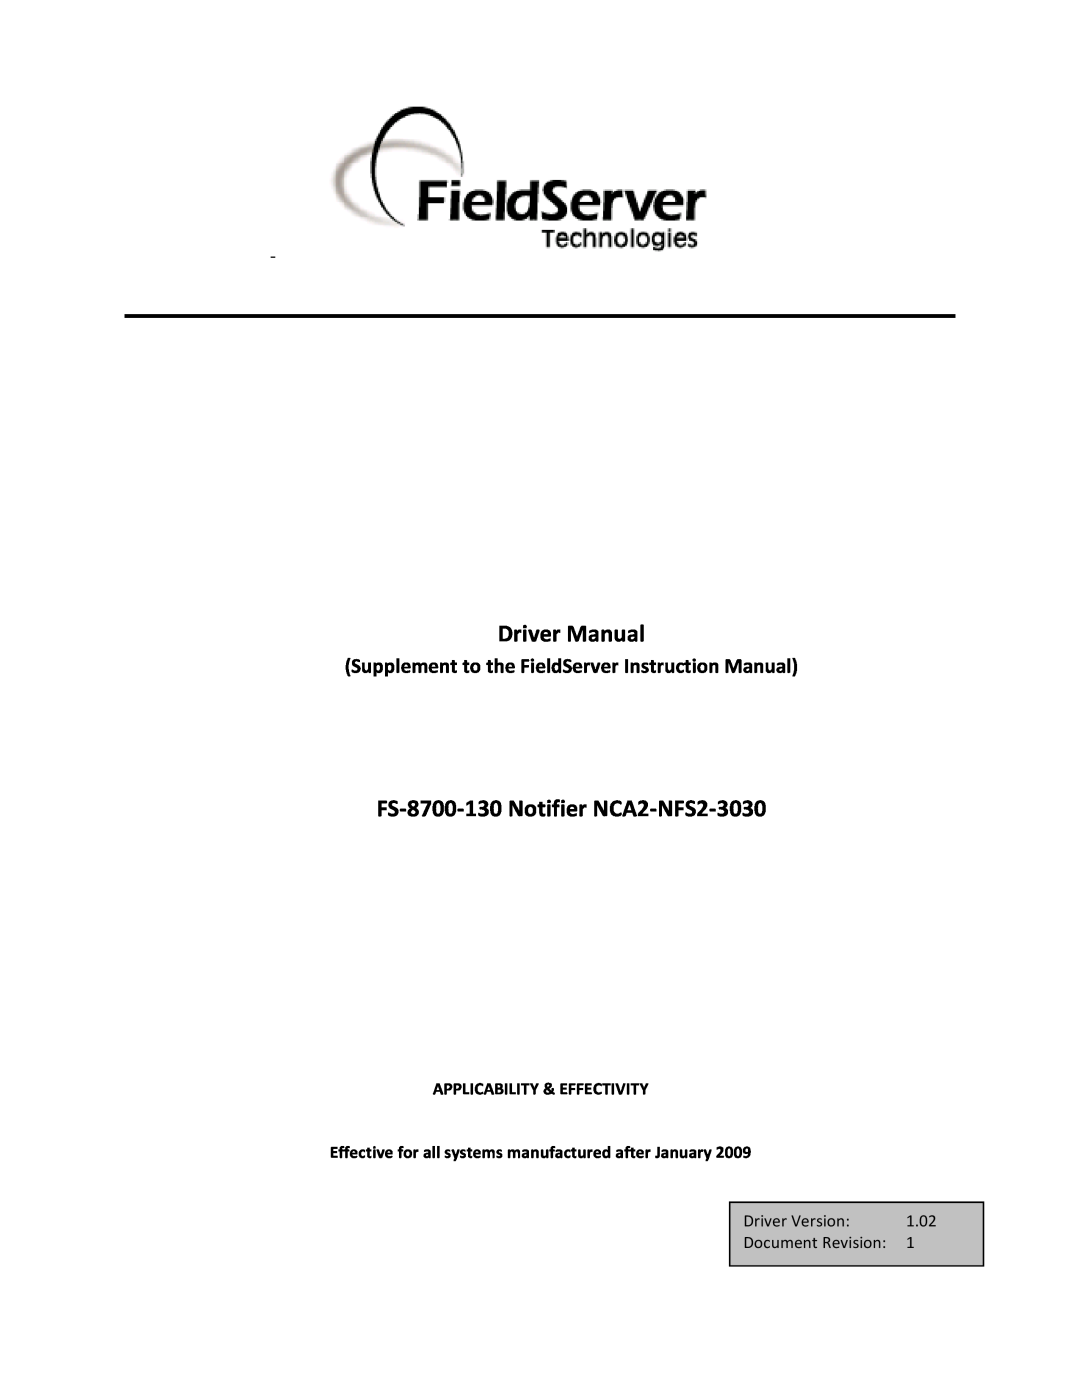 FieldServer NCA2-NFS2-3030, FS-8700-130 instruction manual Supplement to the FieldServer Instruction Manual, Driver Manual 